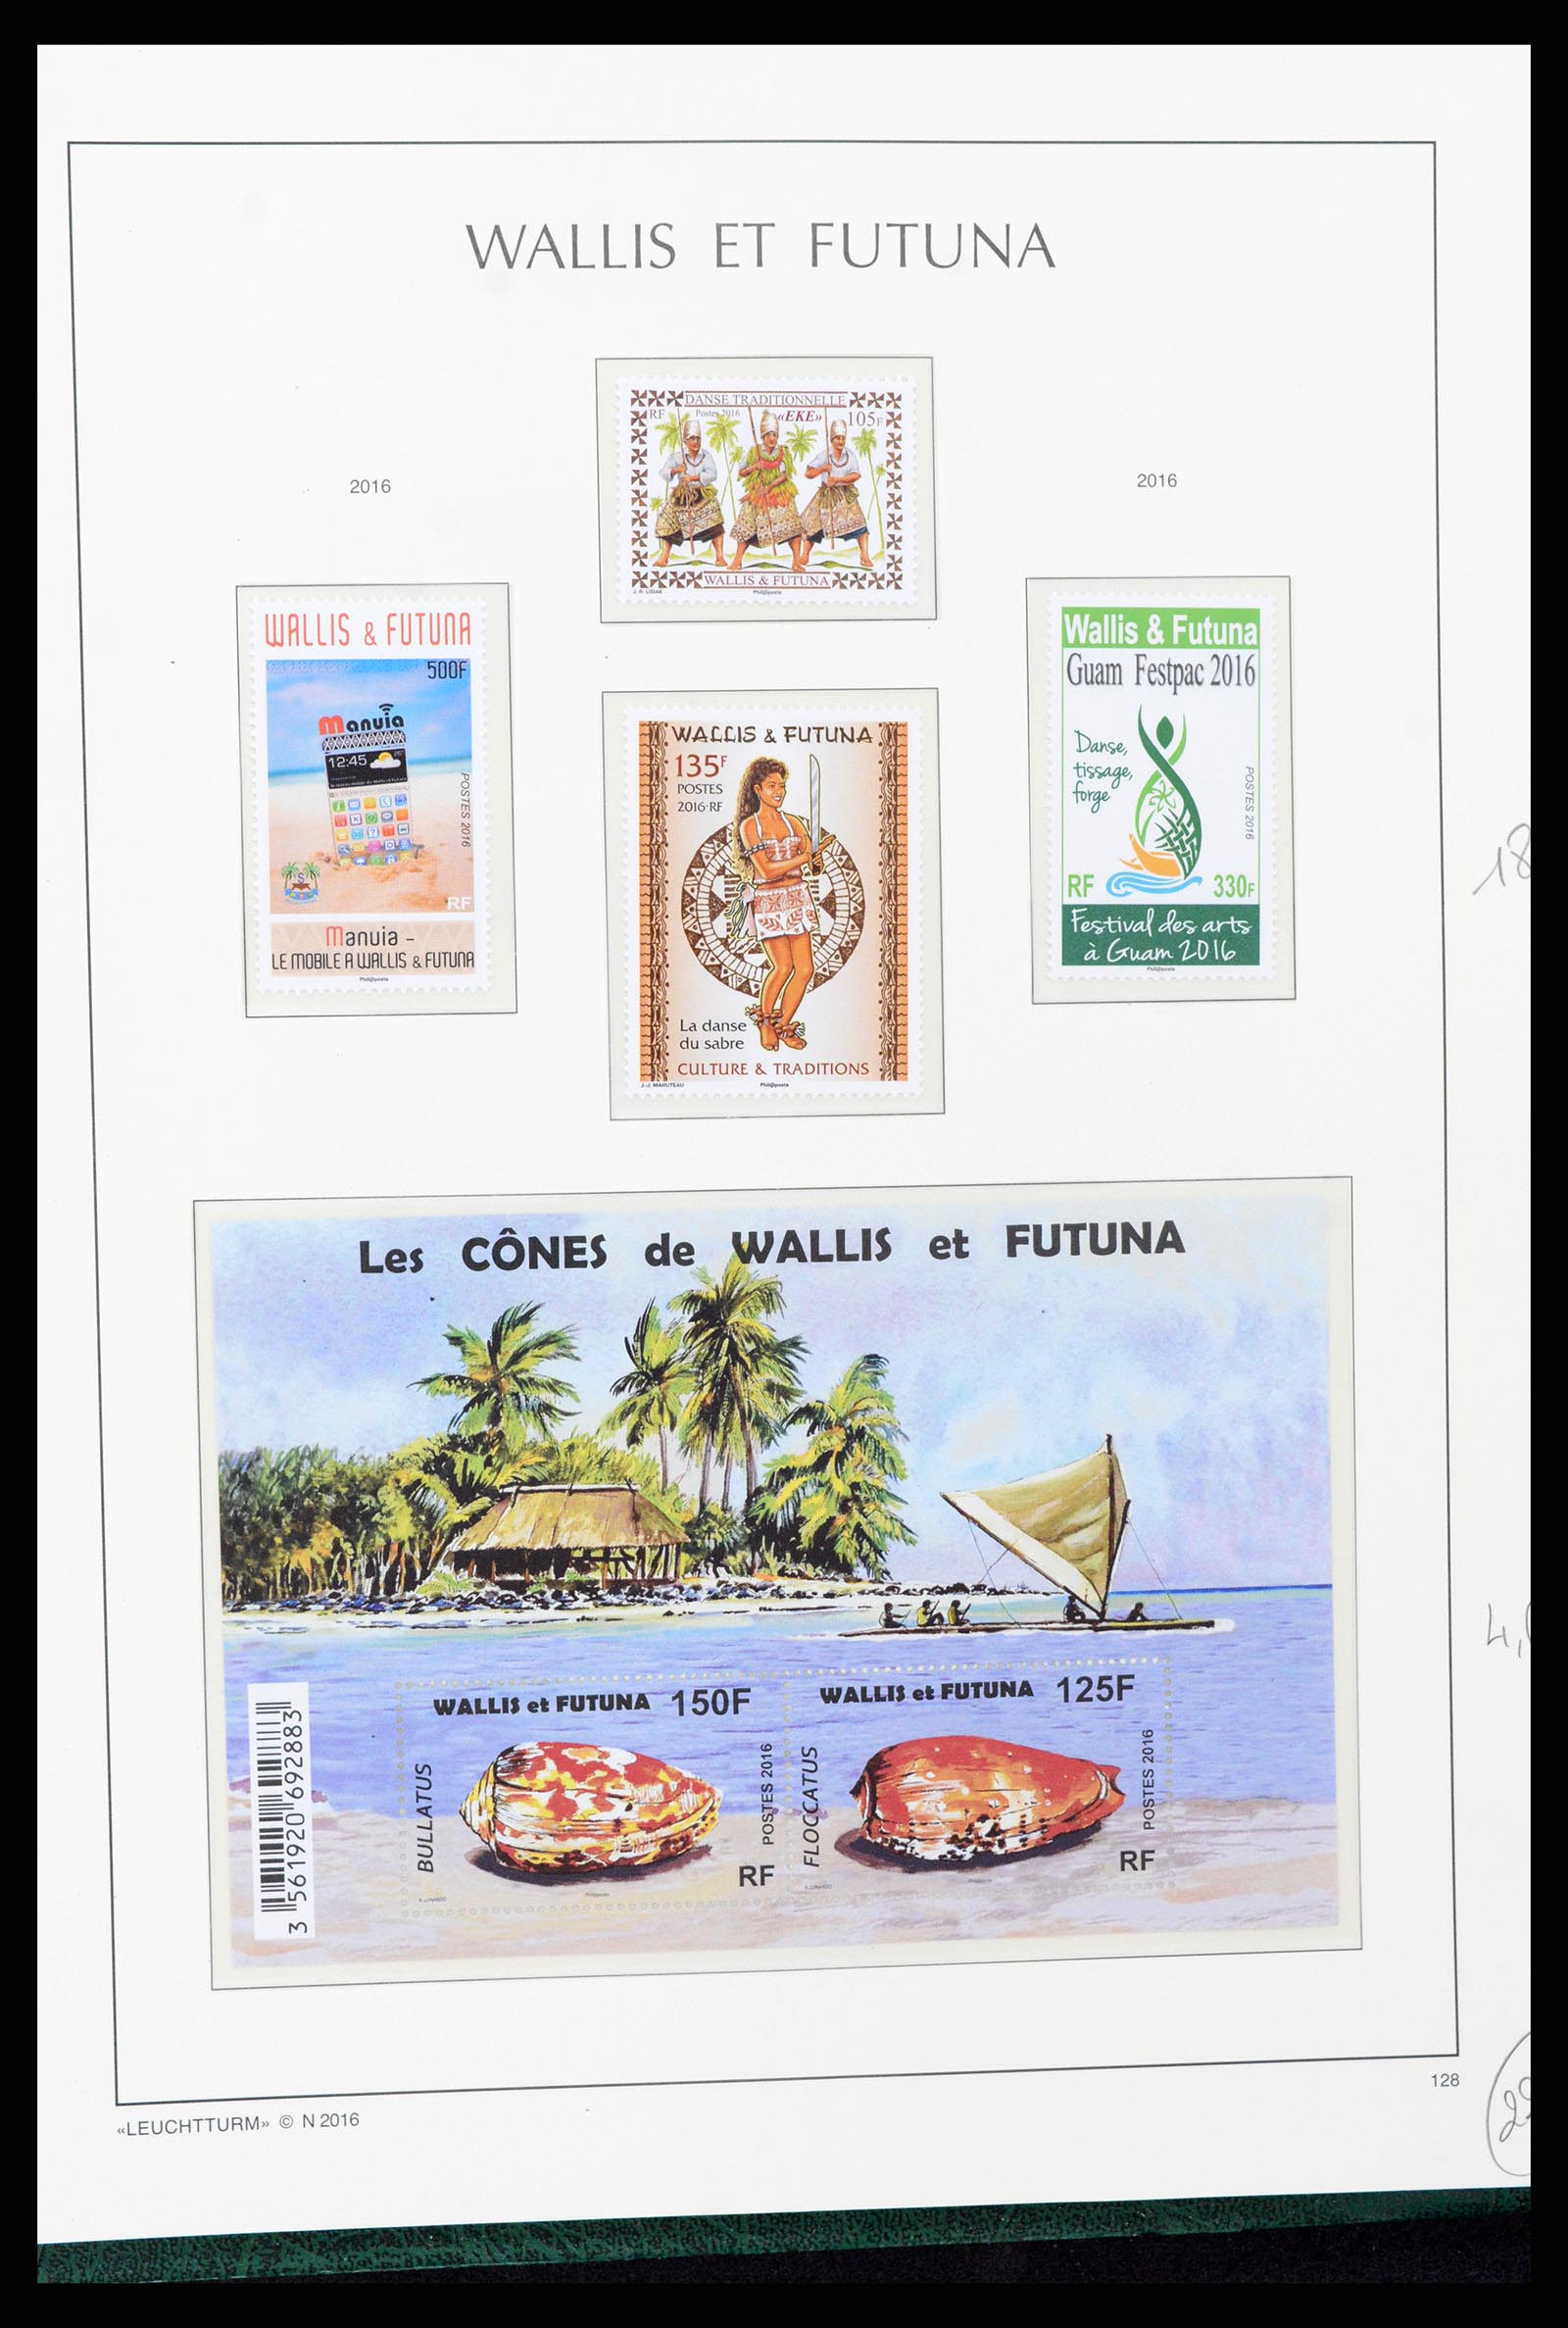 37316 095 - Stamp collection 37316 Wallis et Futuna 1980-2018!